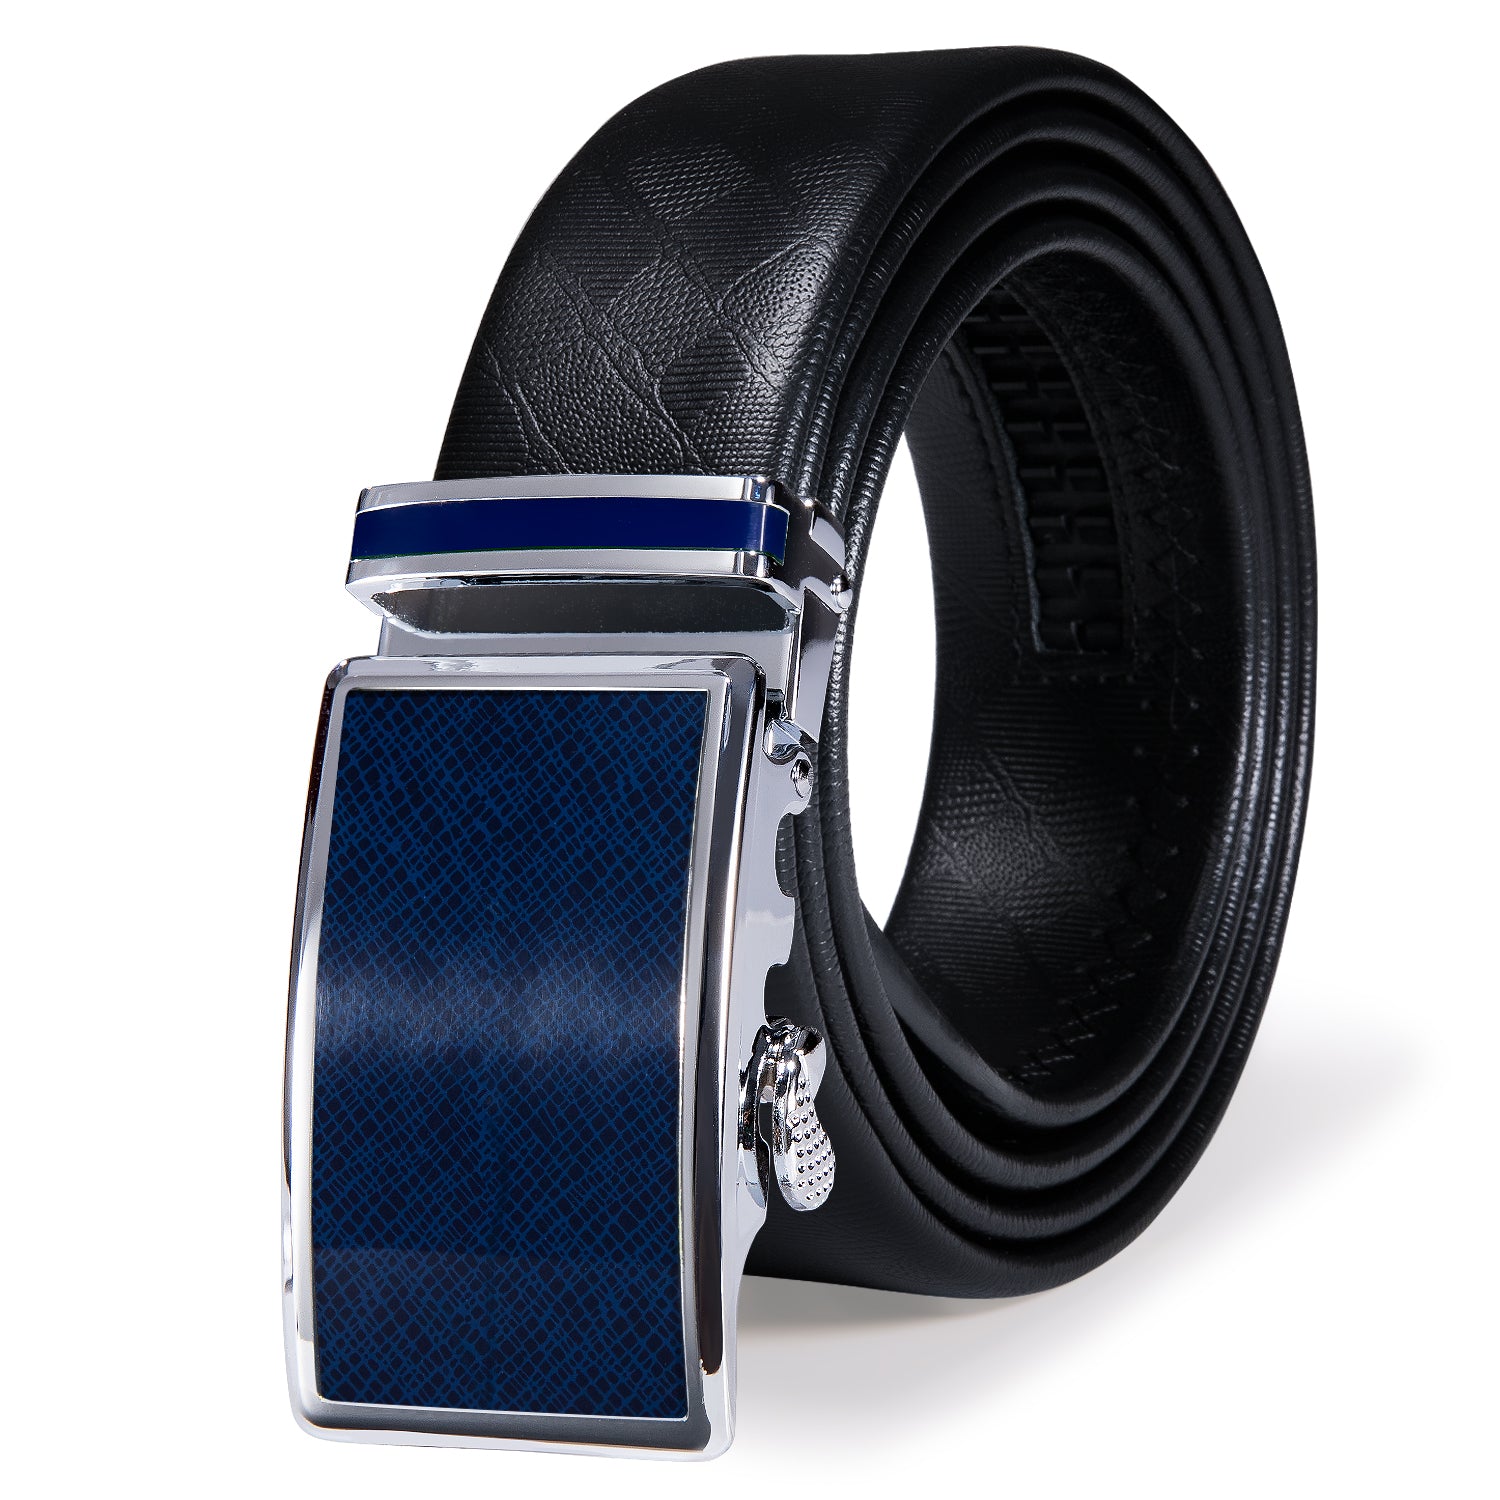 New Blue Metal Buckle Genuine Leather Belt 110cm-160cm